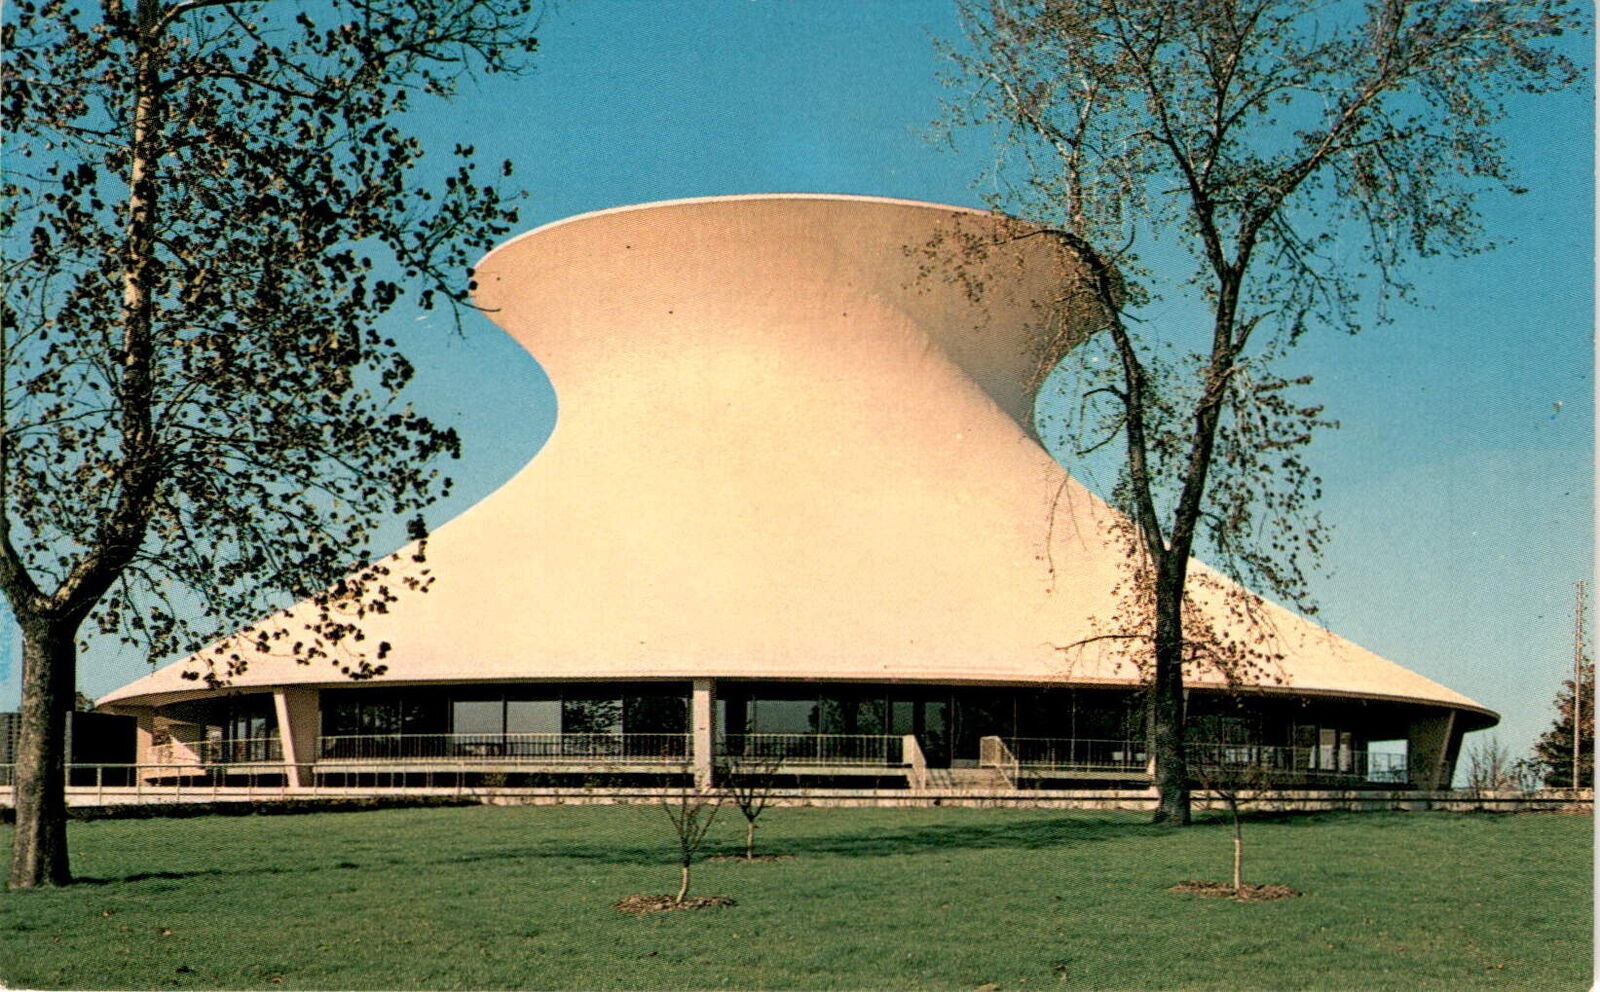 McDonnell Planetarium, Forest Park, St. Louis, Missouri, Theater of Postcard